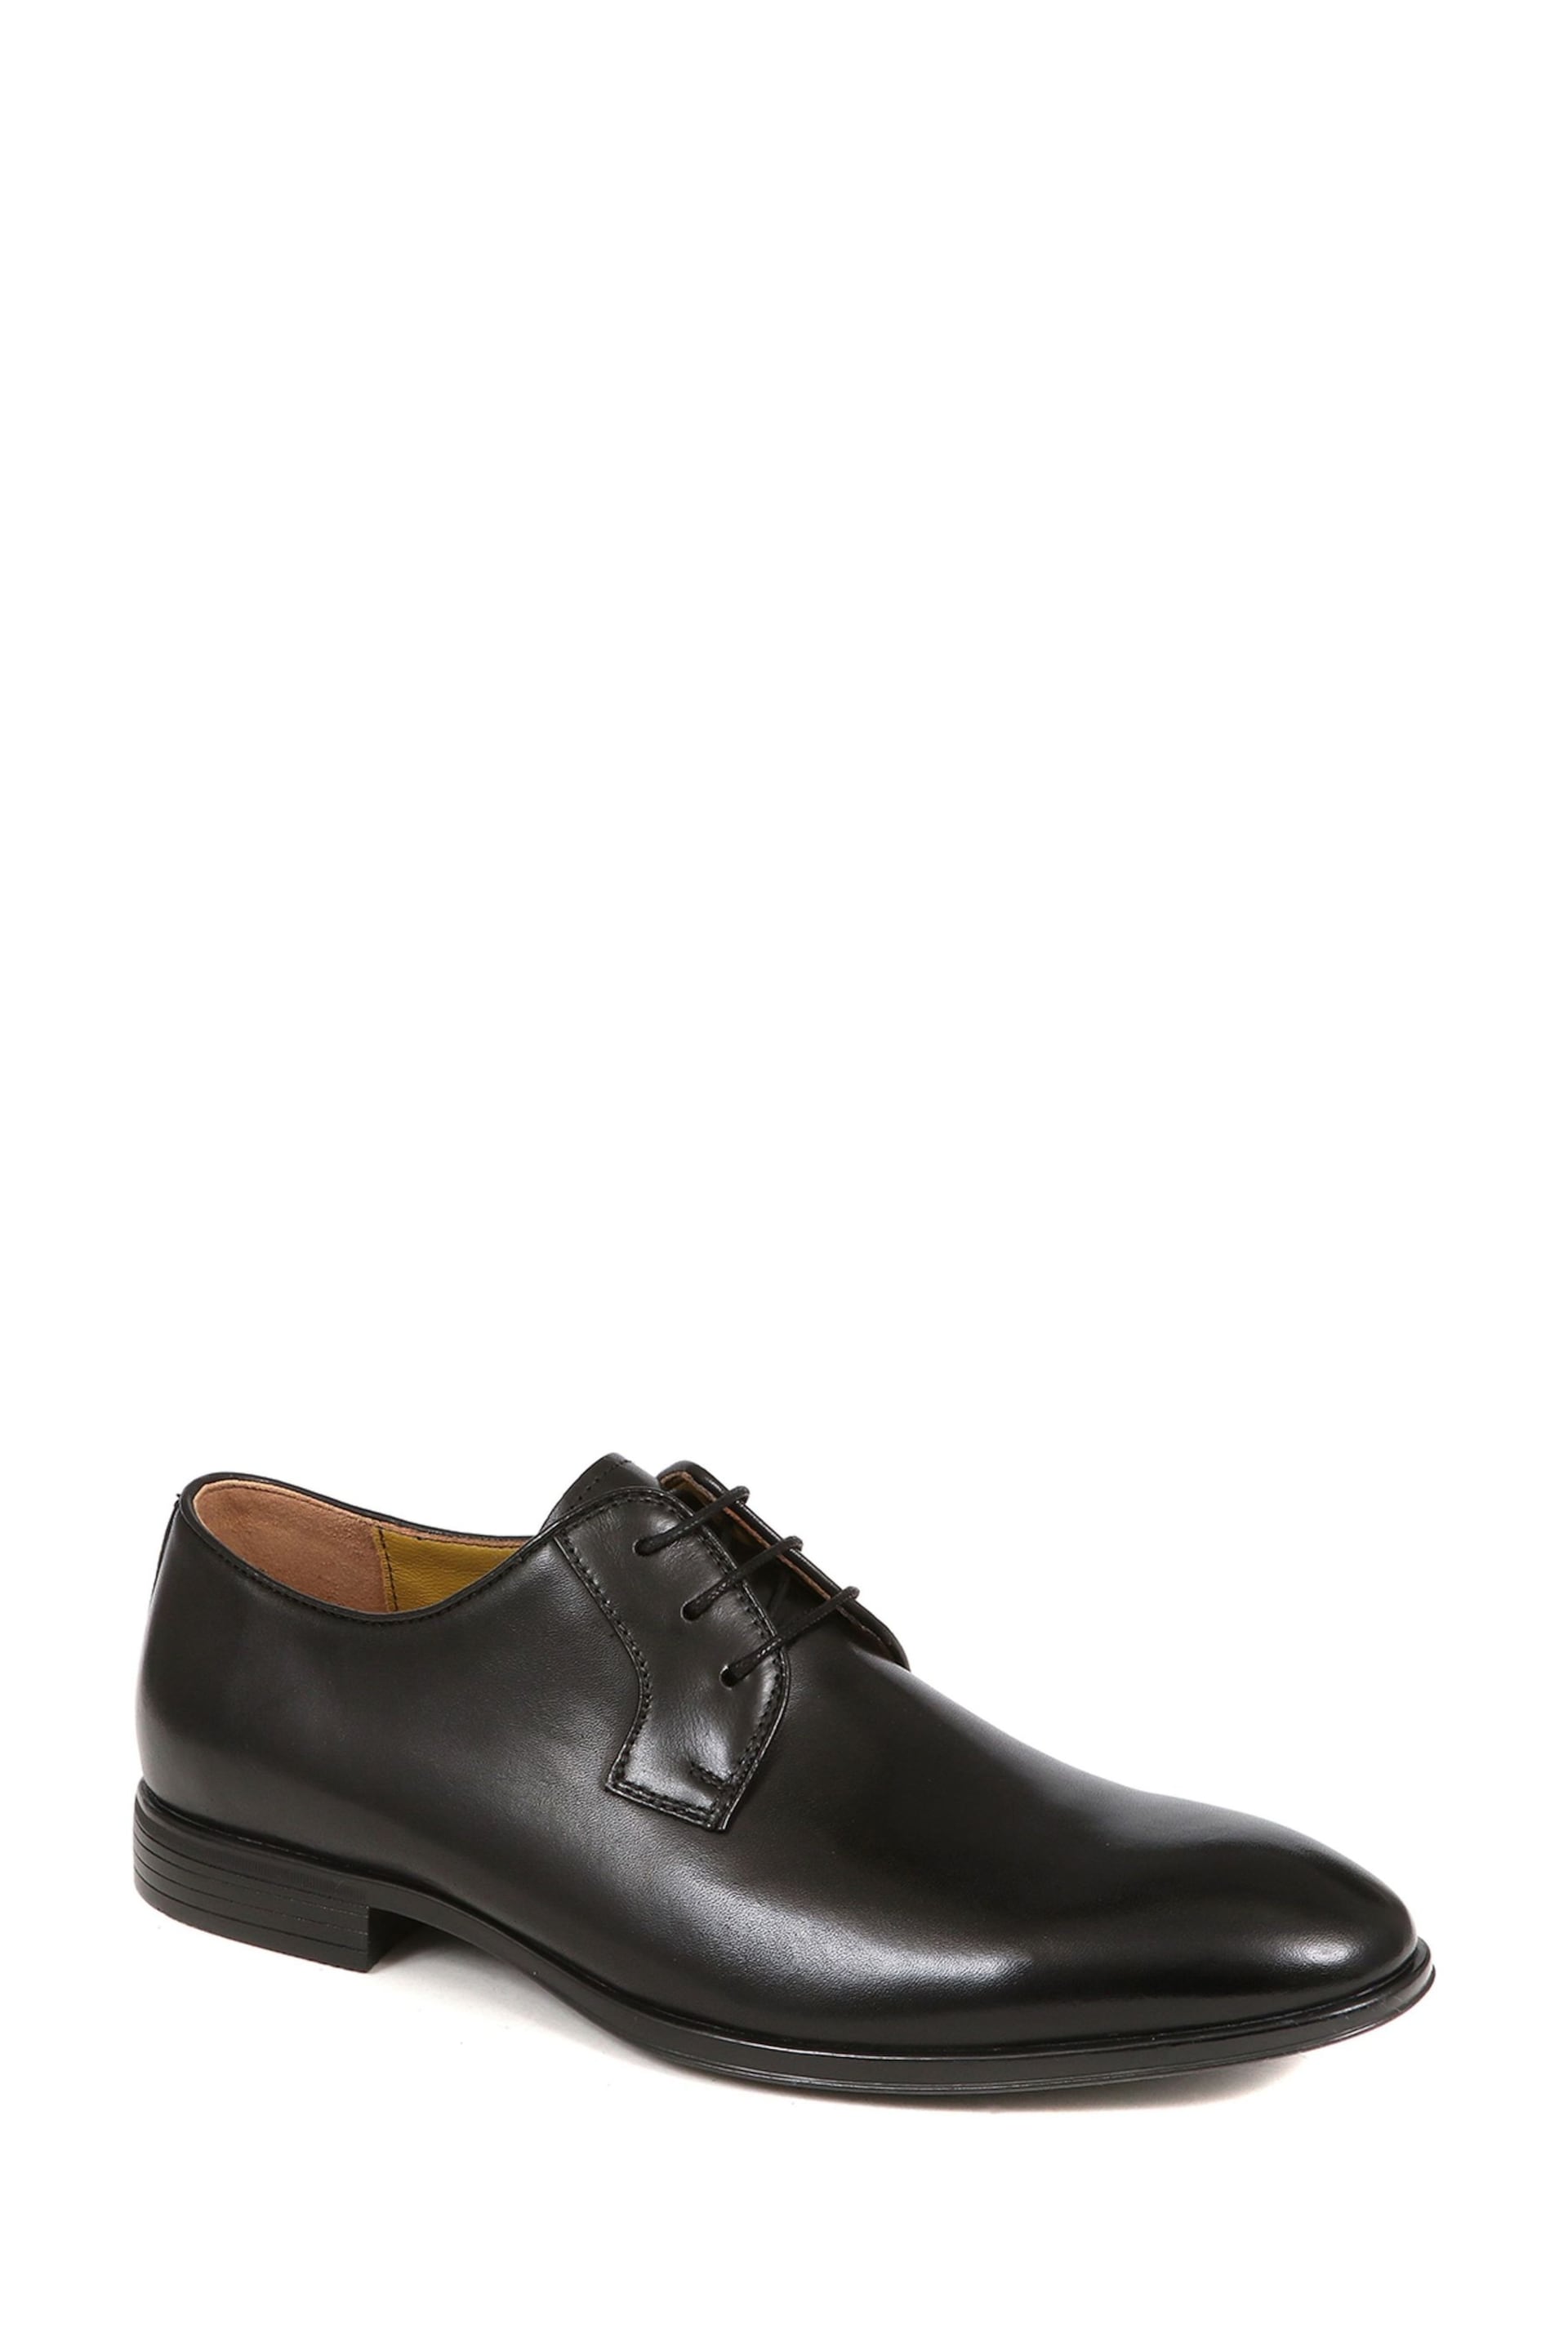 Jones Bootmaker Manchester Leather Derby Black Shoes - Image 2 of 5